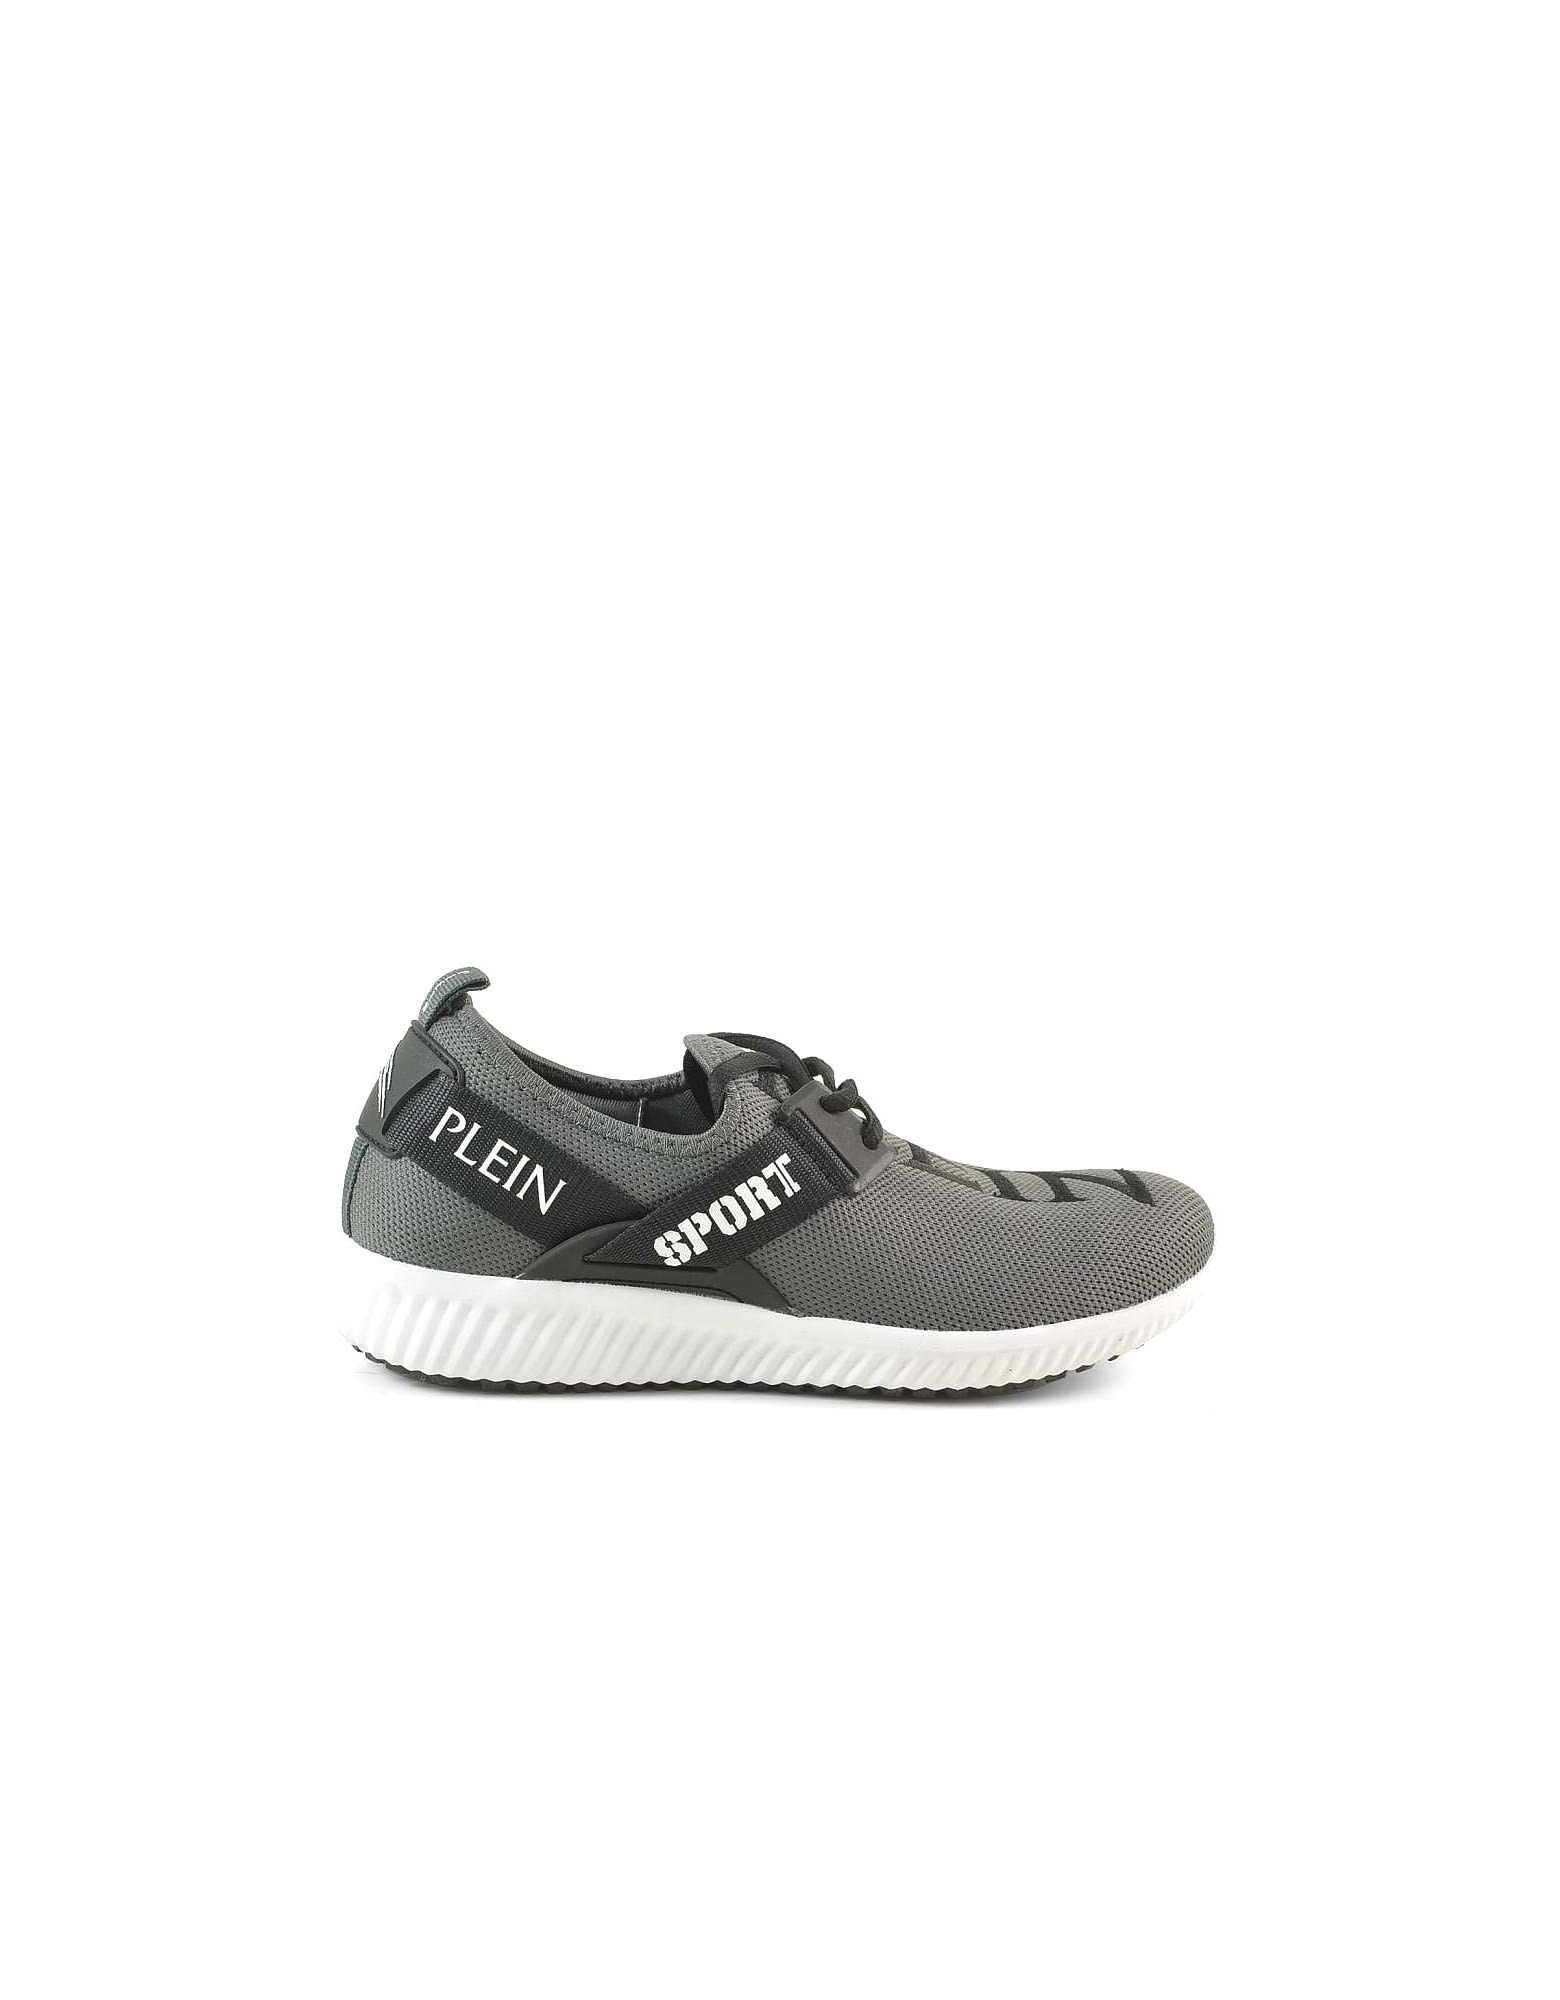 Philipp Plein Black/gray Tecno-fabric Womens Sneakers